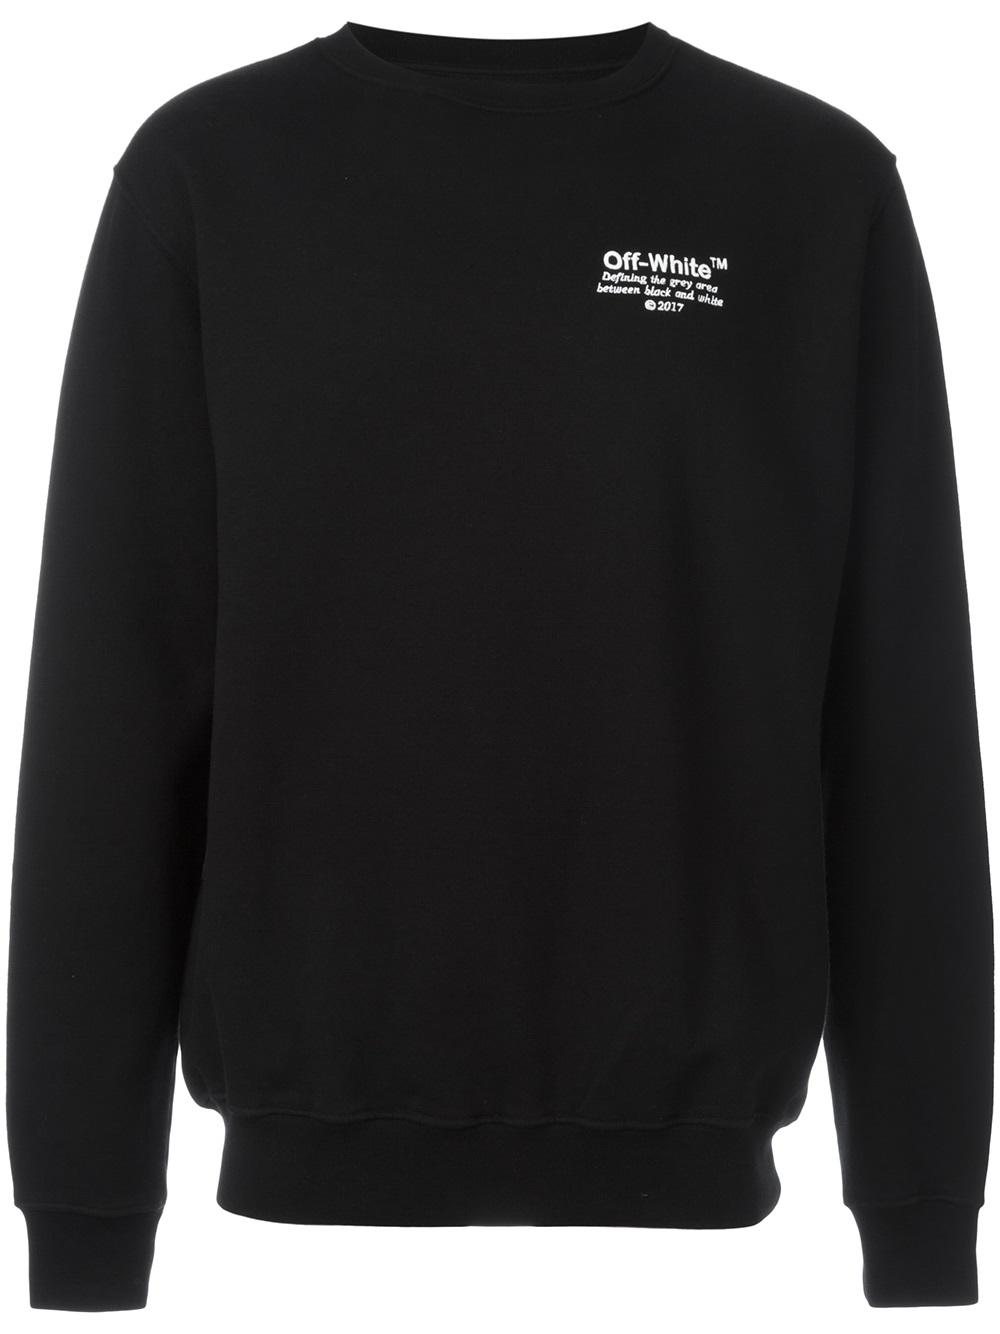 Off-White embroidered sweatshirt BLACK Men Clothing Sweatshirts